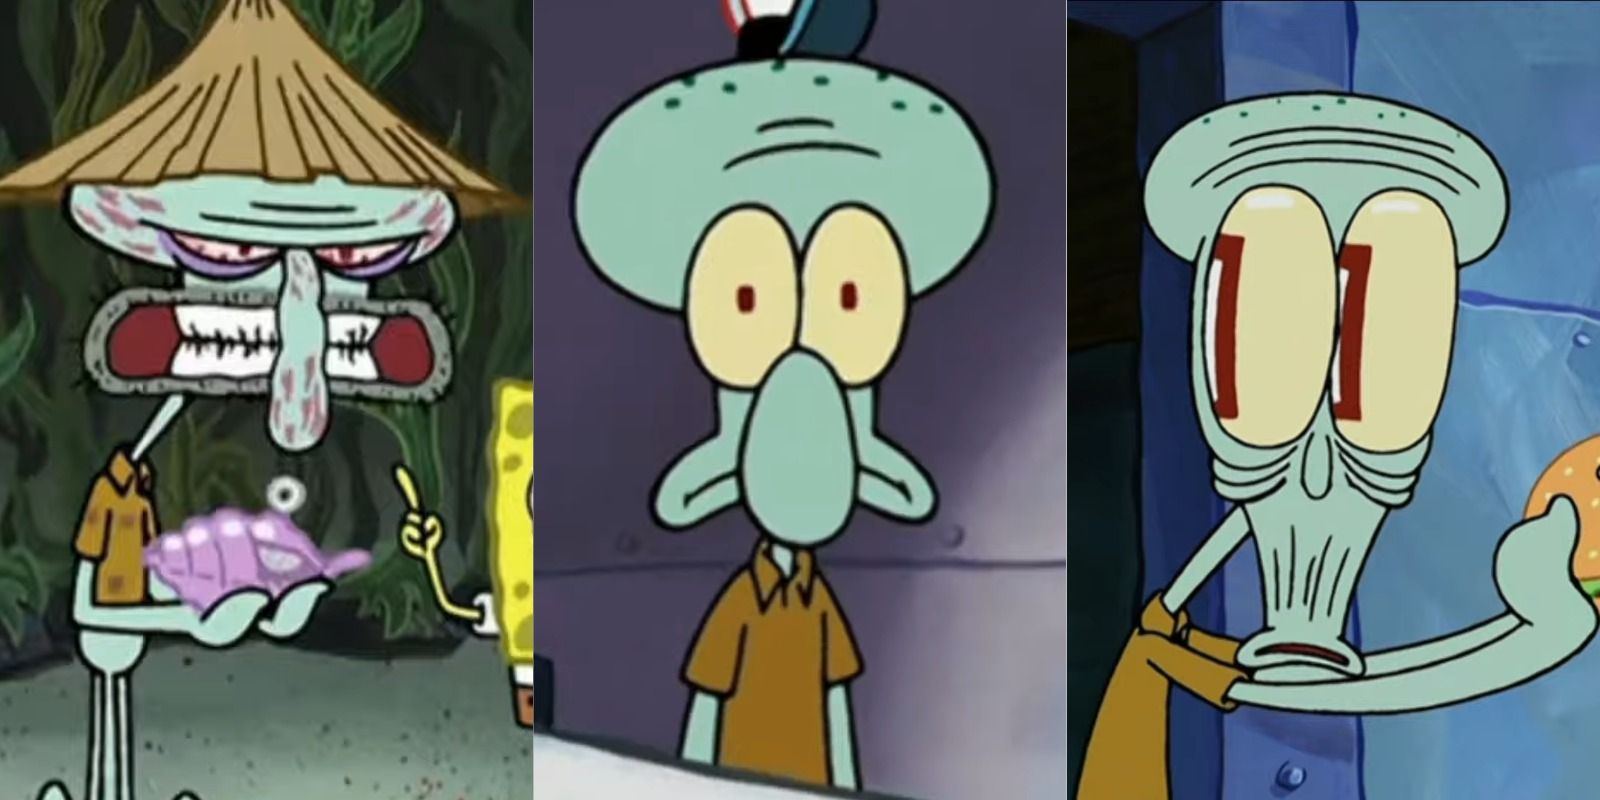 Split image of Squidward from various episodes of SpongeBob SquarePants